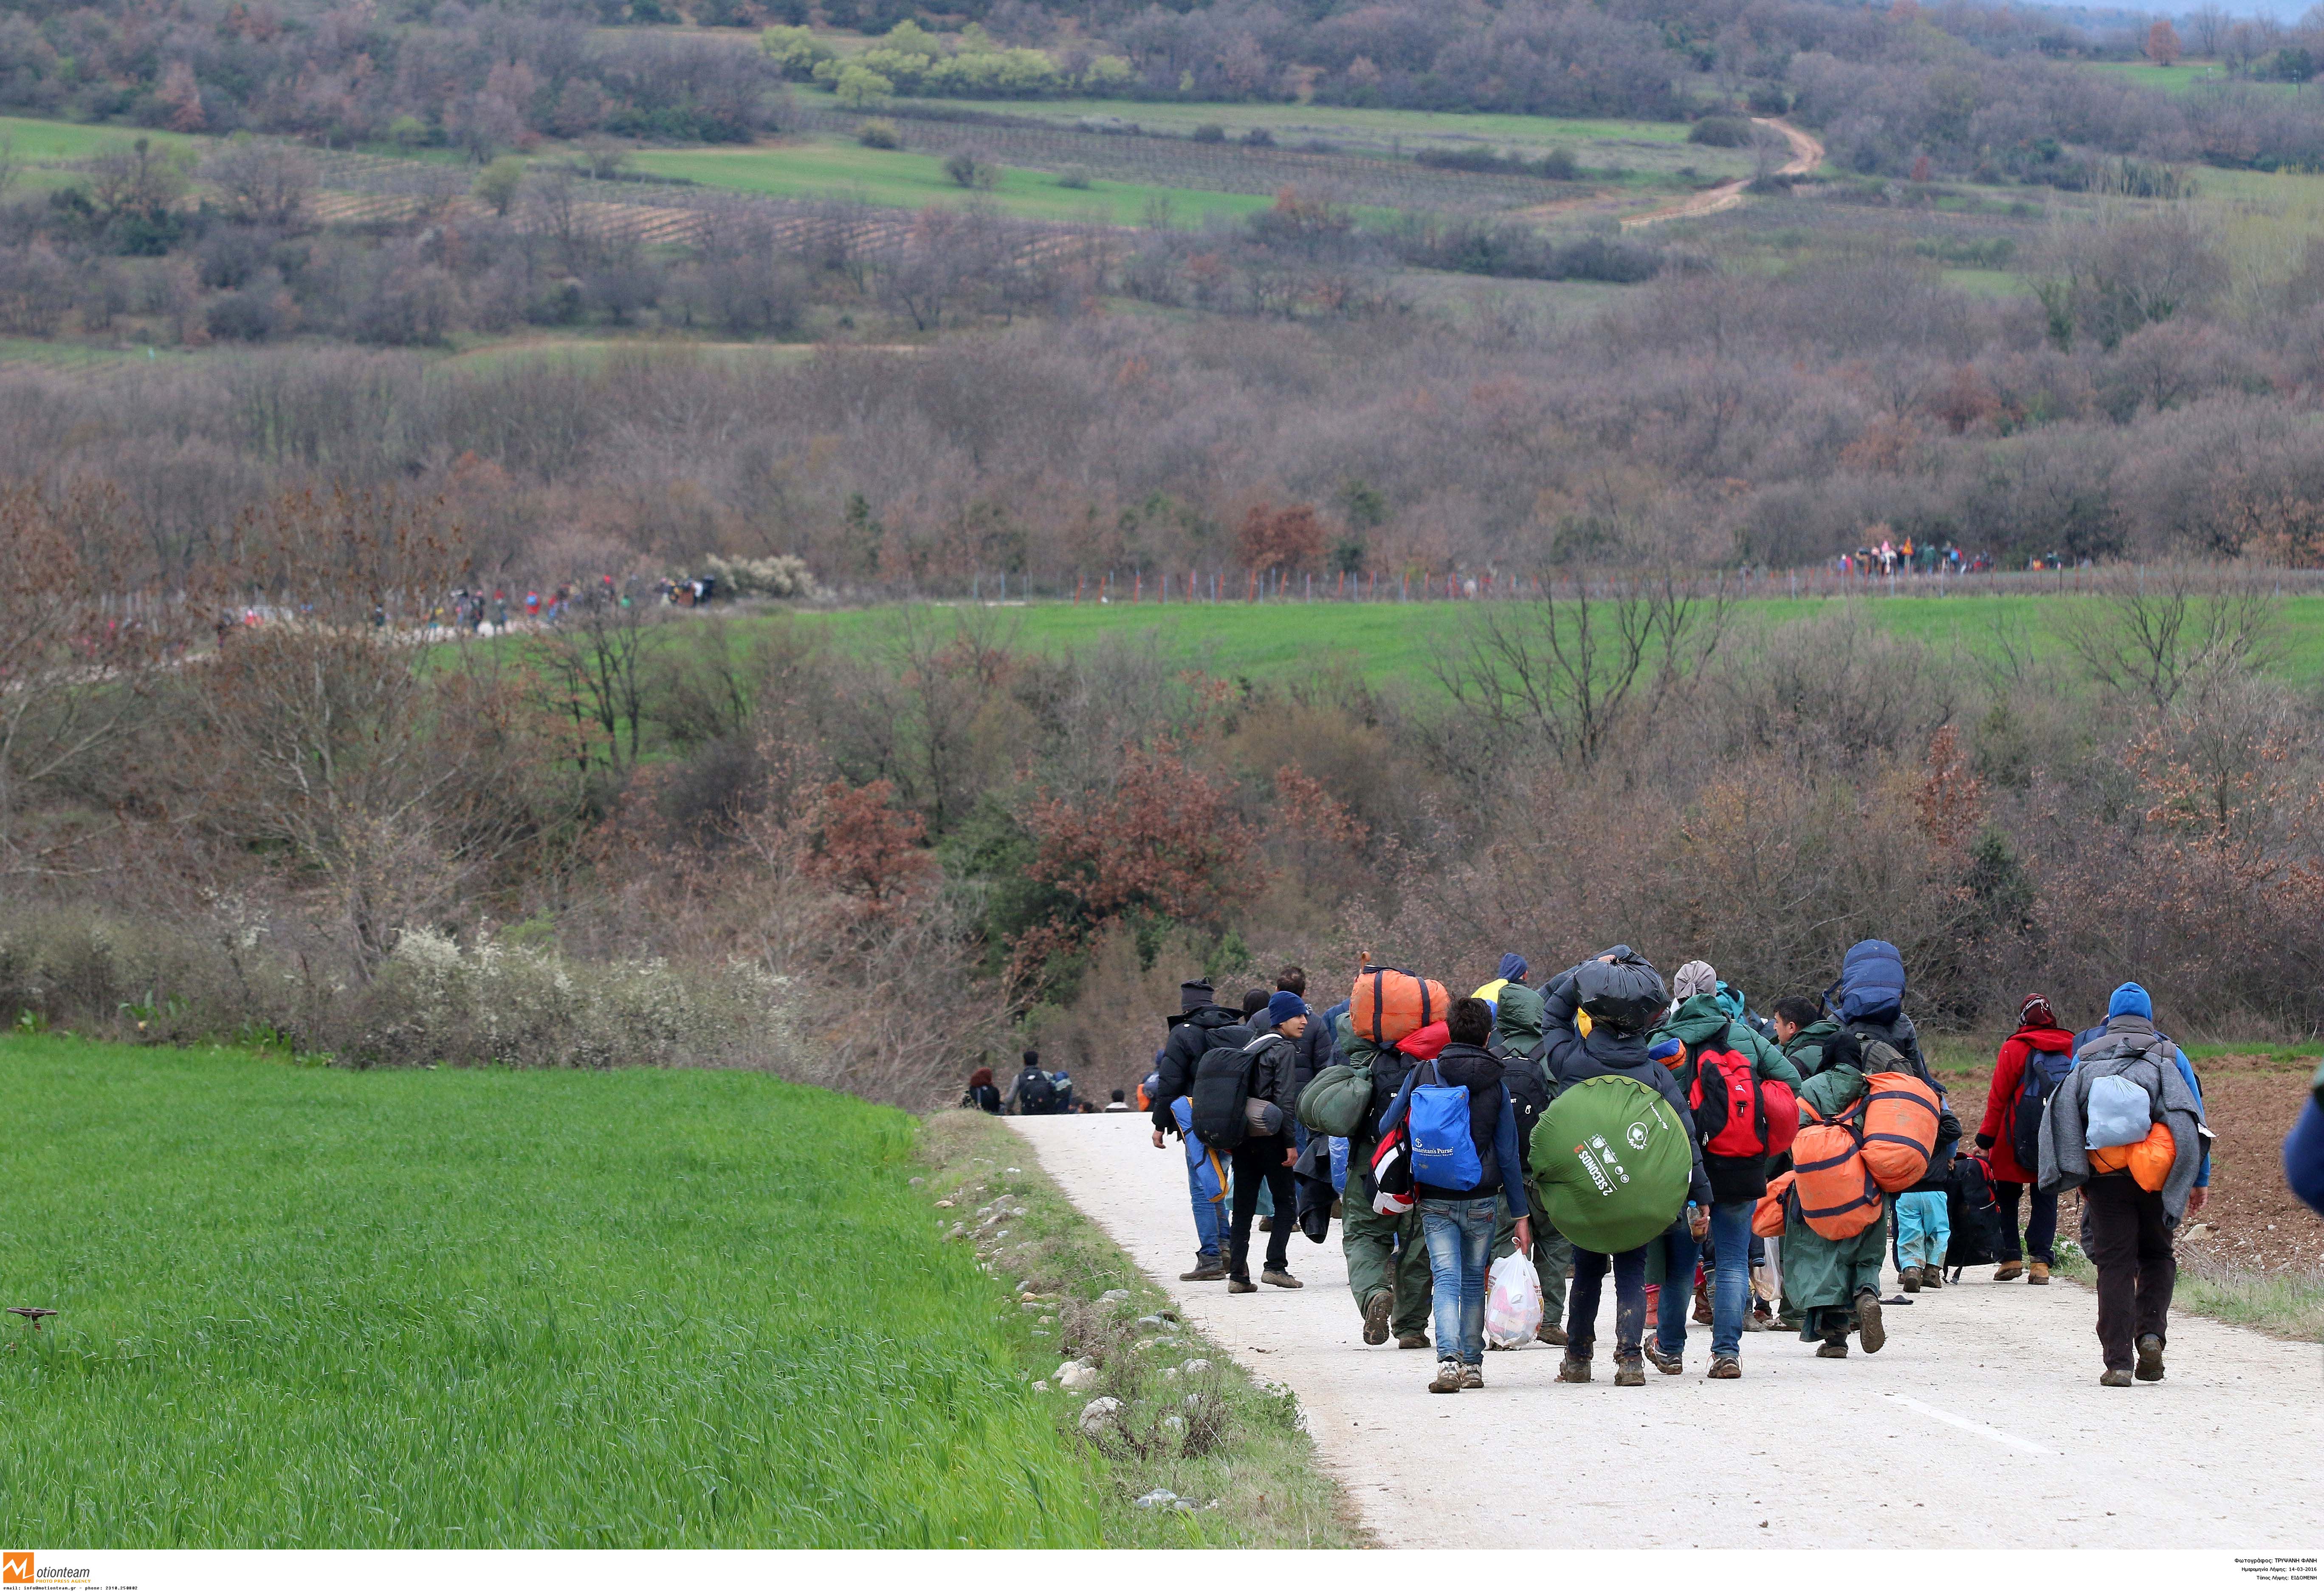 H κυβέρνηση αγνοεί τι συνέβη με τους 1.400 πρόσφυγες που πέρασαν στην πΓΔΜ την Δευτέρα